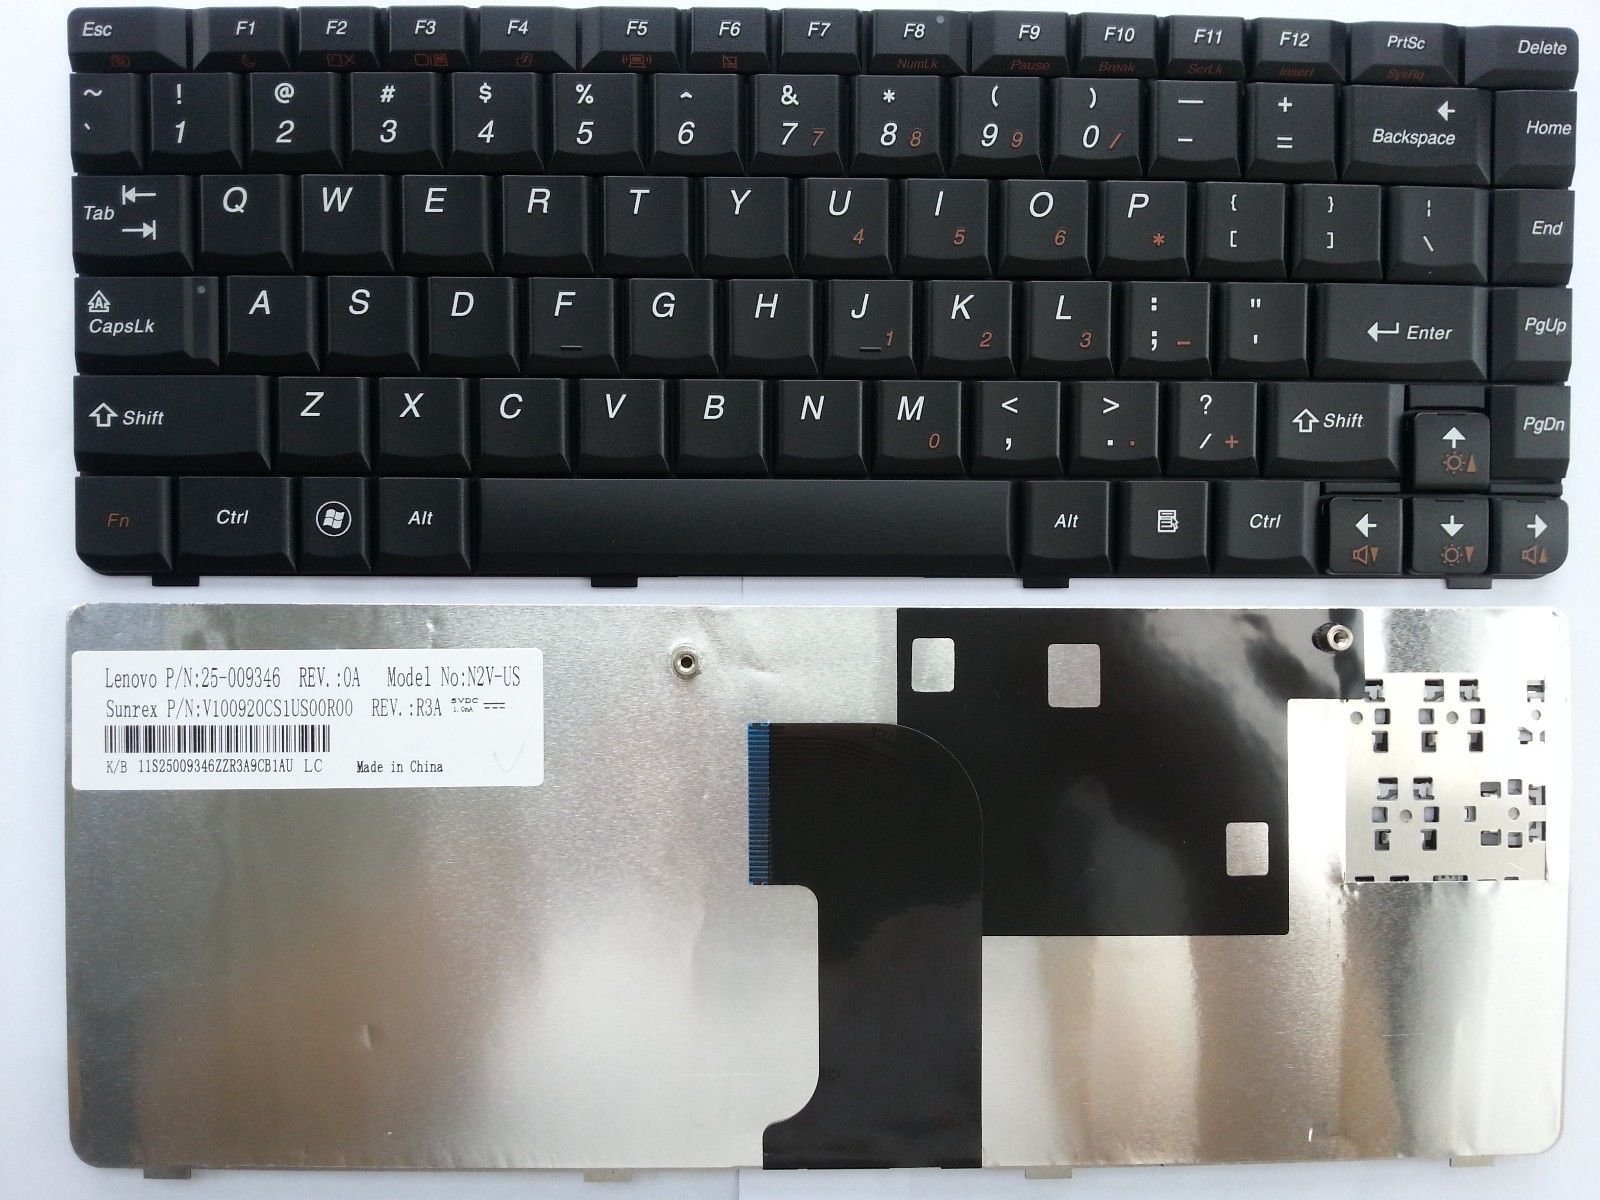 Bàn Phím - Keyboard Laptop Lenovo Ideapad U450 U450A U450P